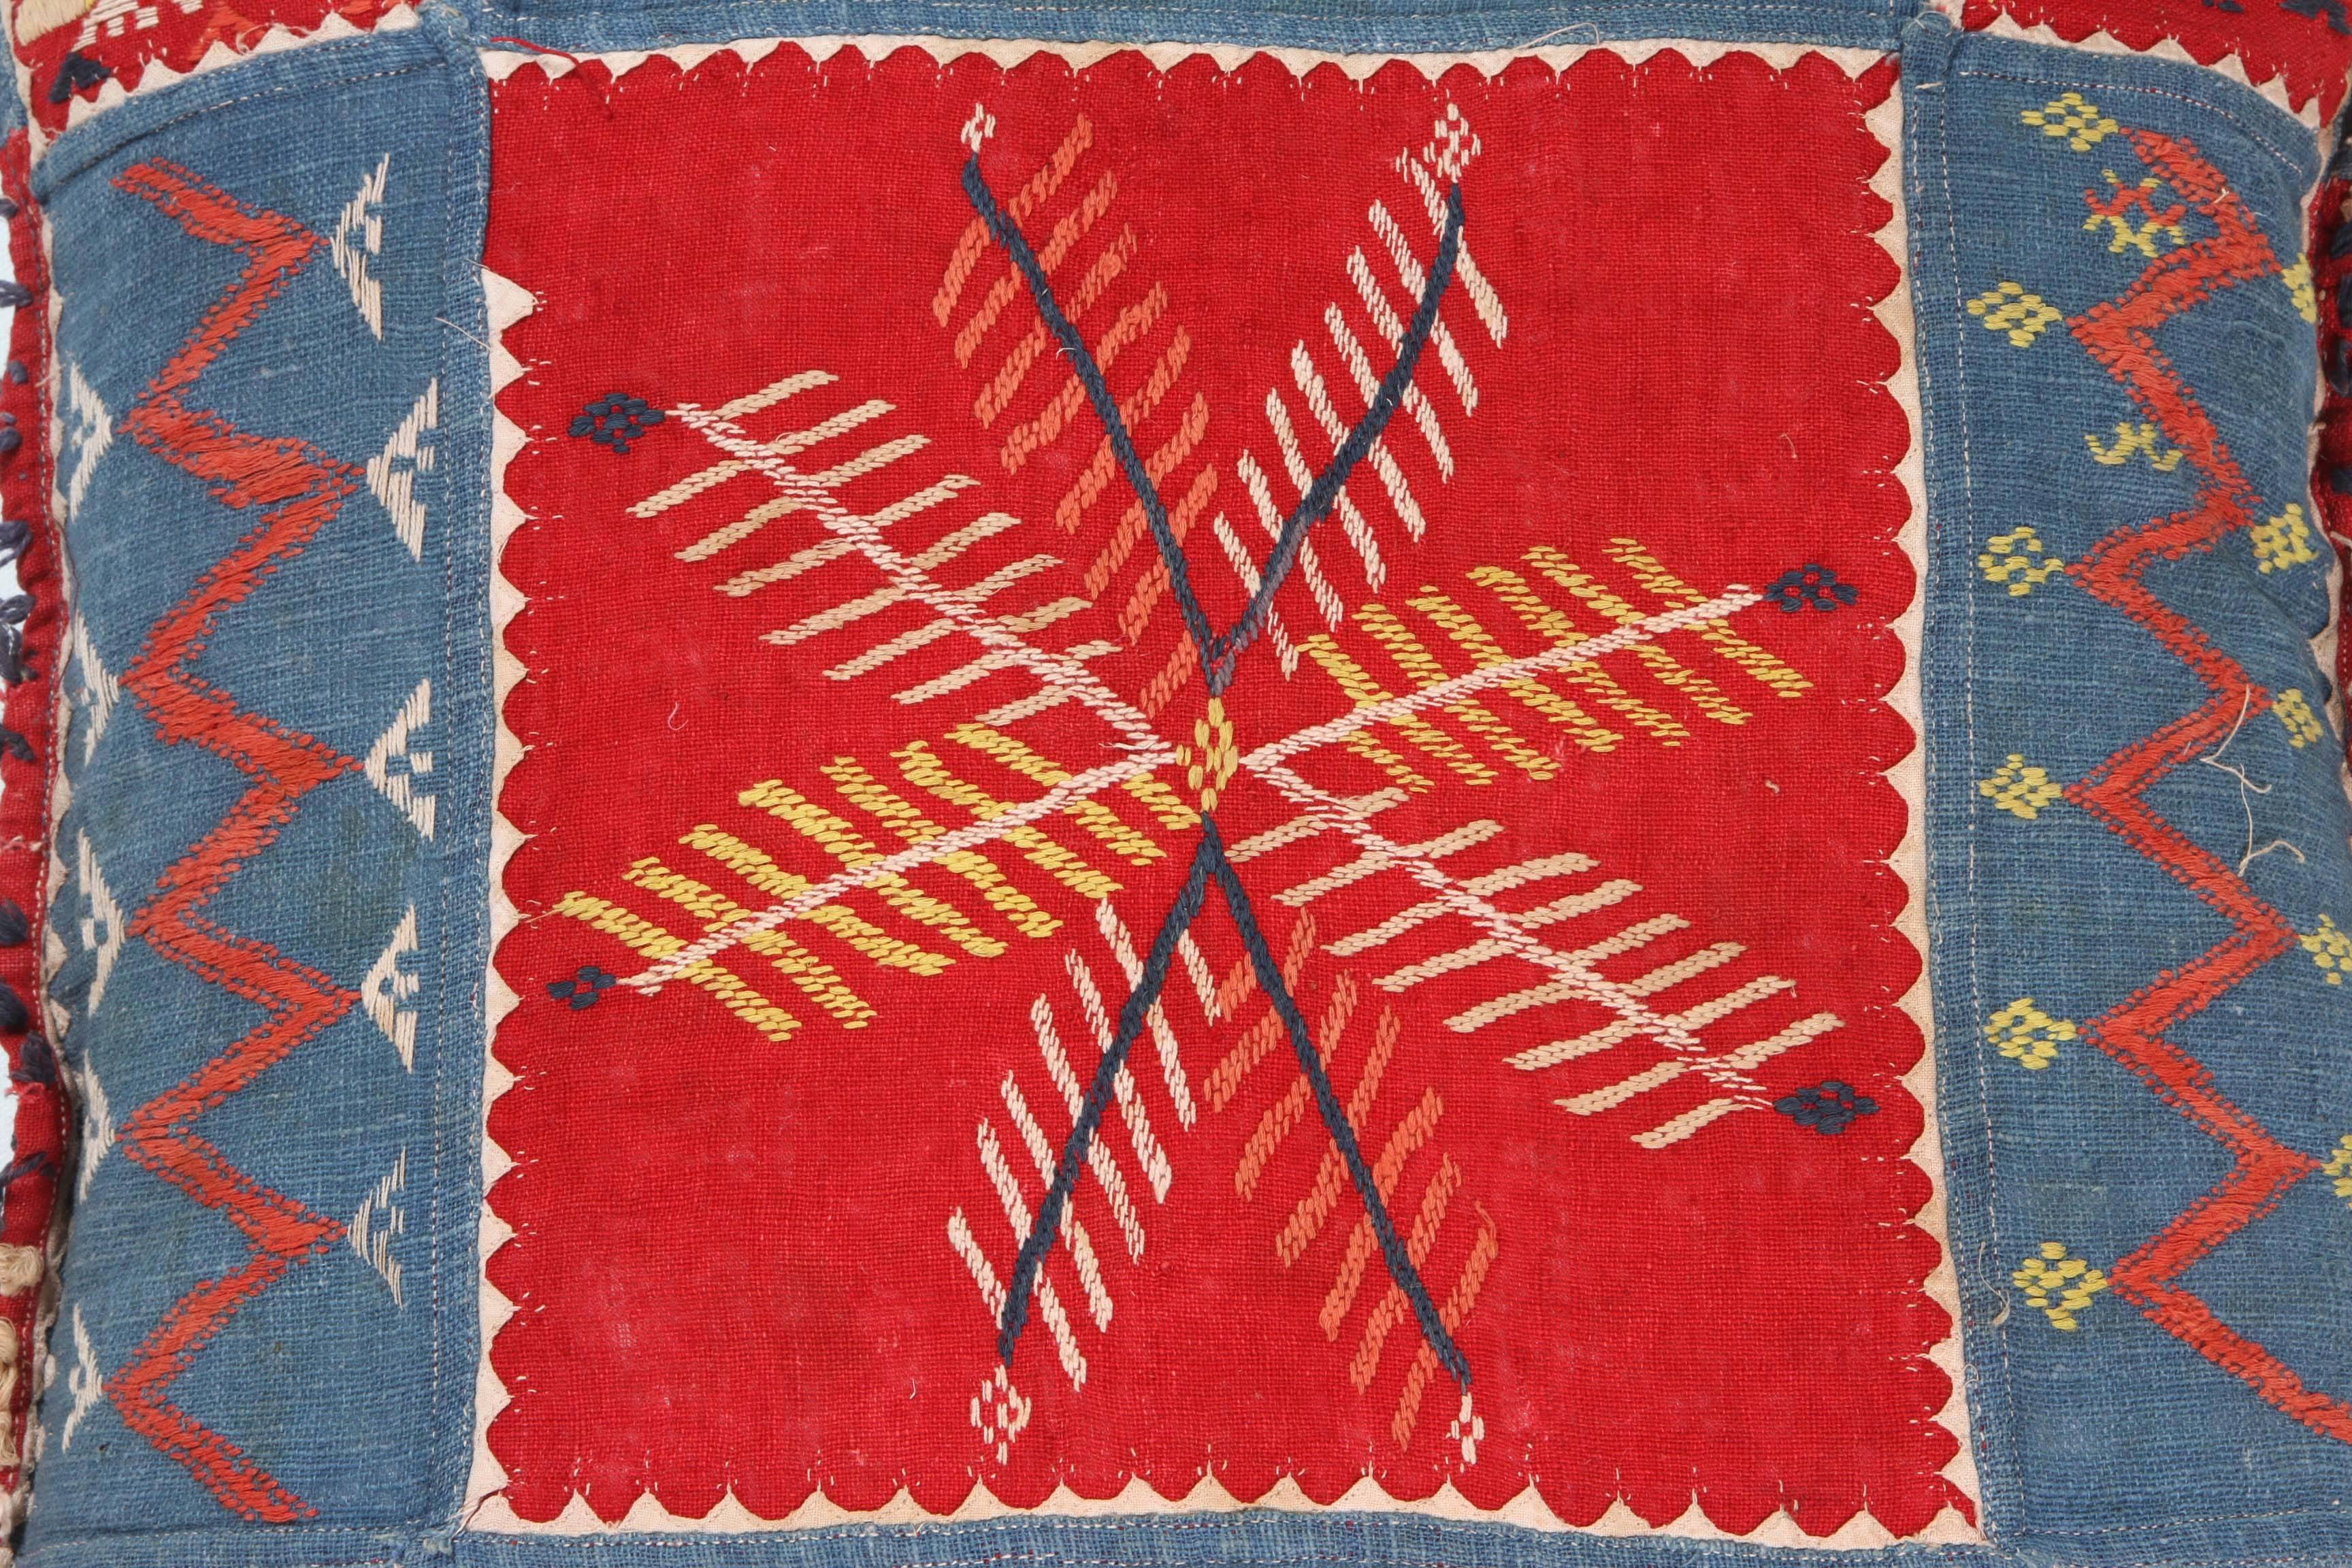 Embroidered Indian Banjara Cotton Pillow, Red, Blue, Yellow, Ivory, Orange